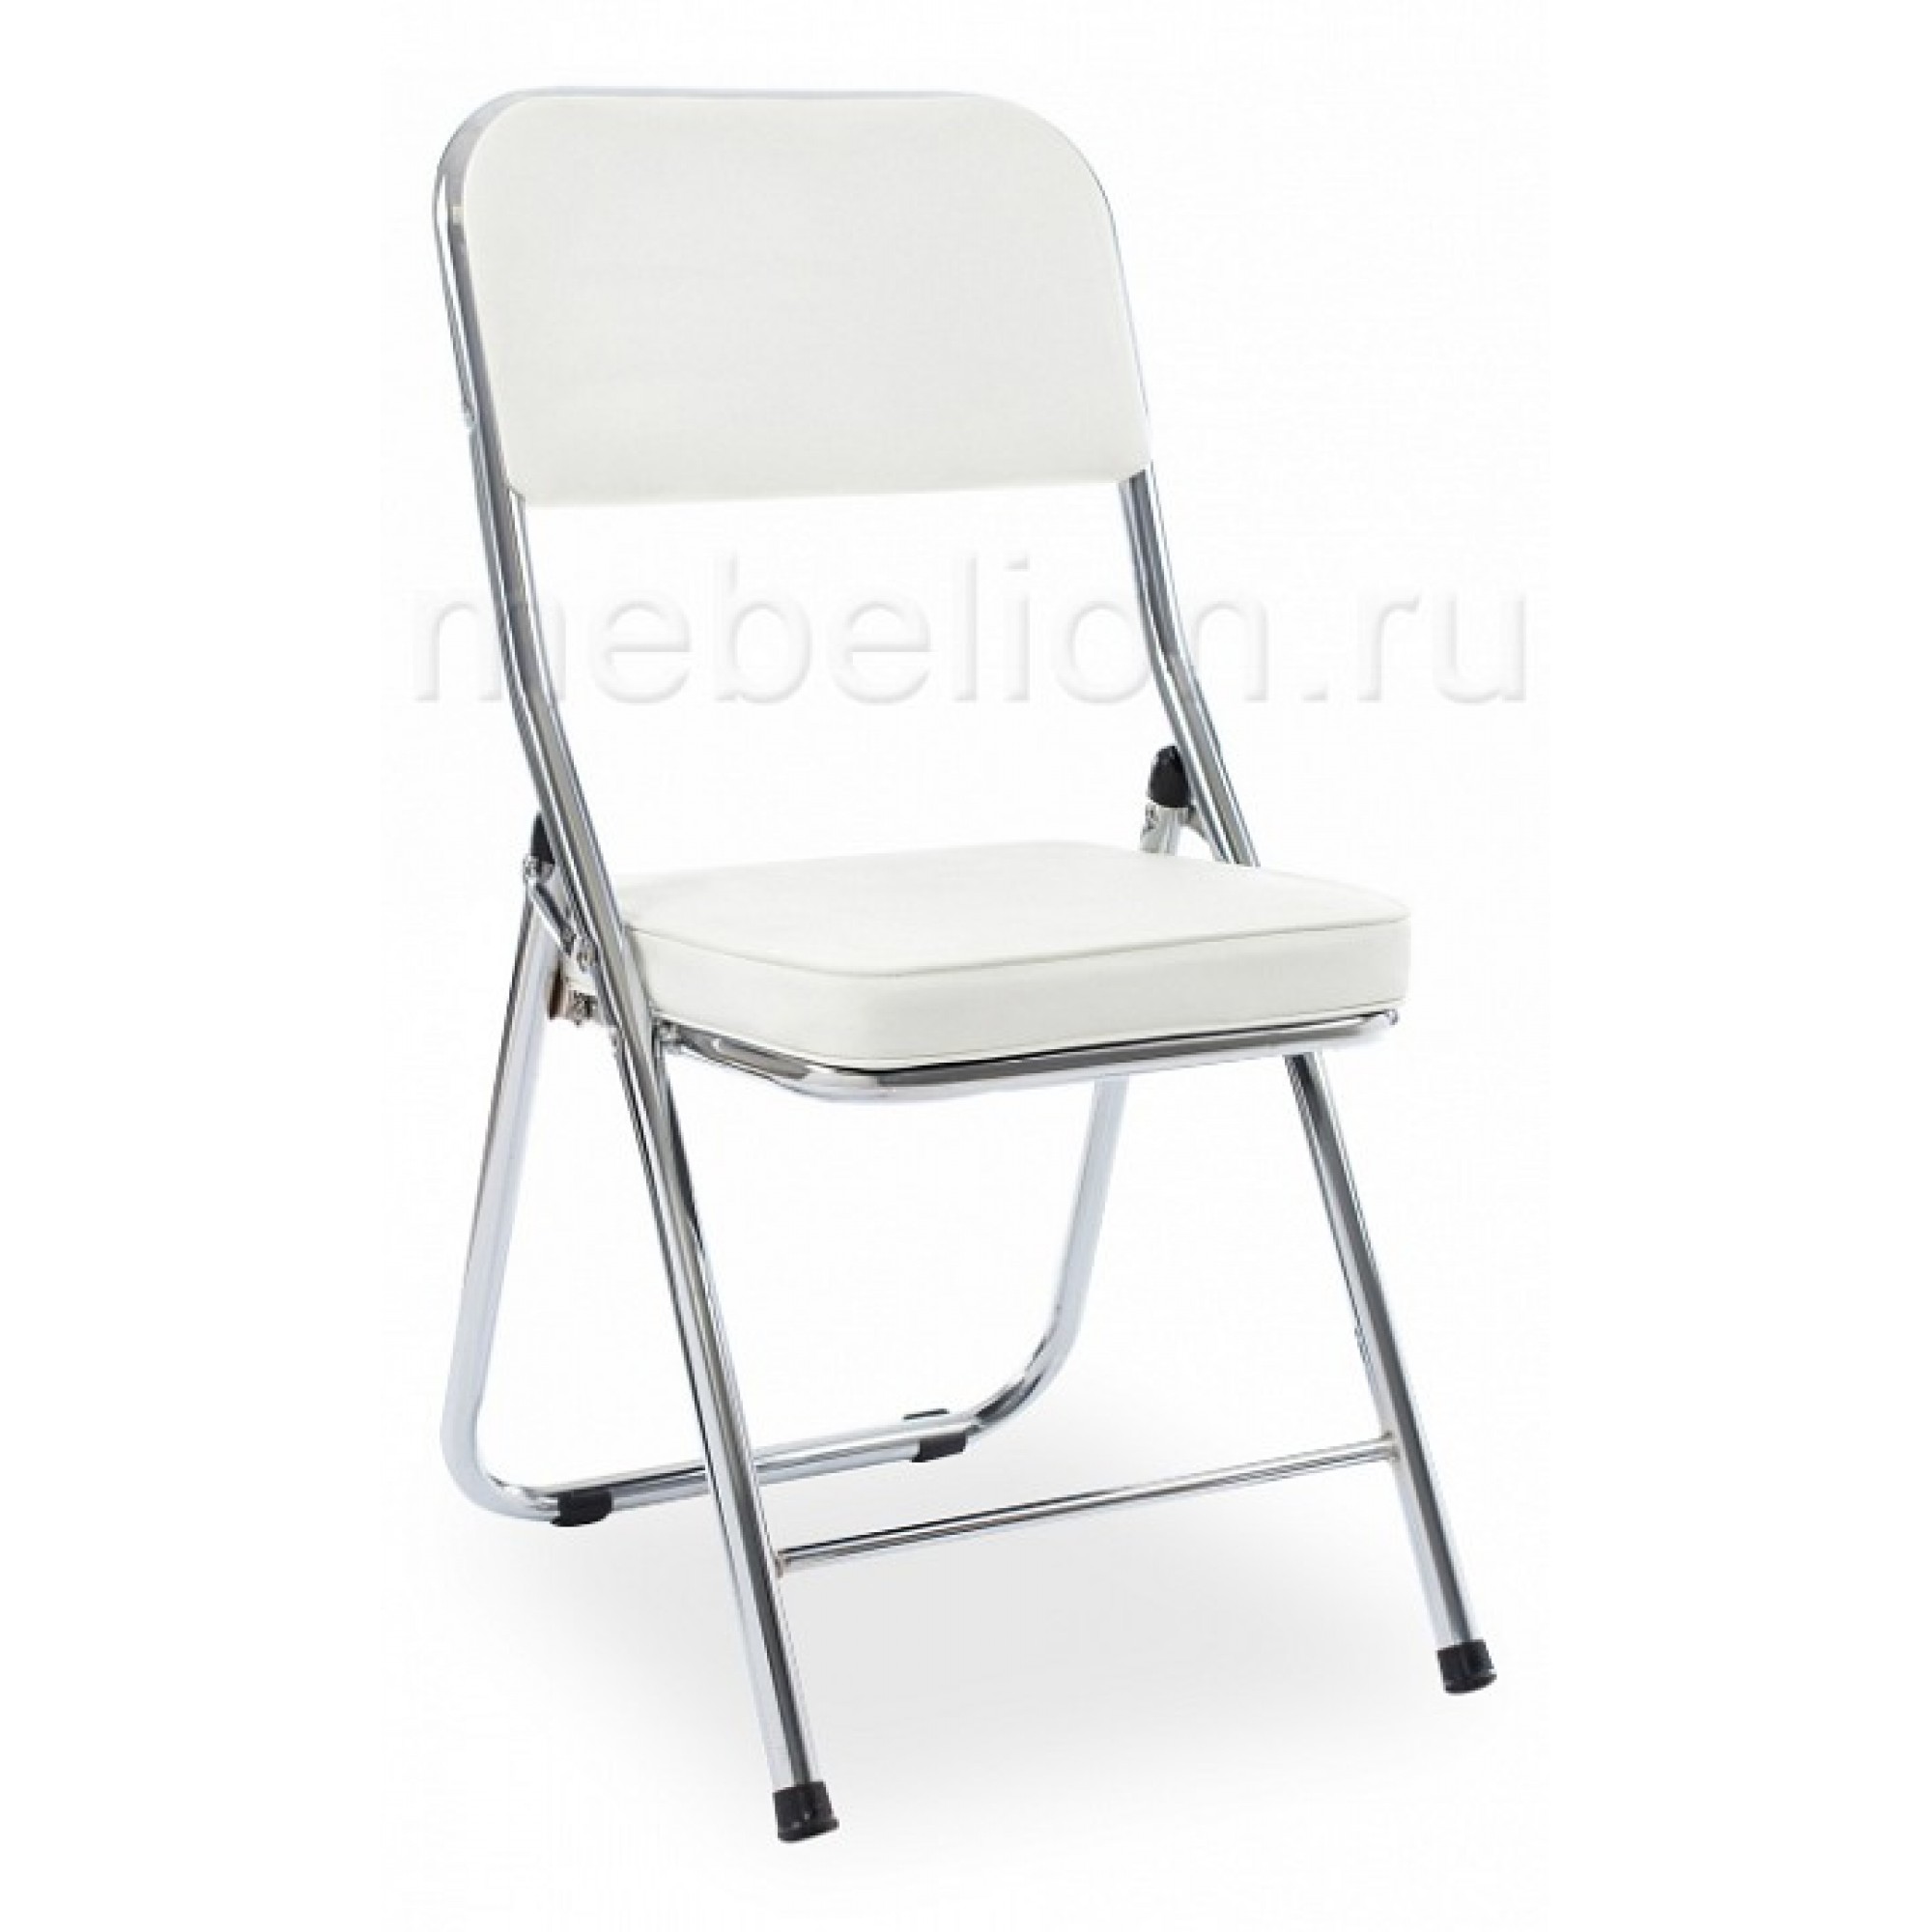 Стул складной Chair белый 440x530x820(WO_11072)